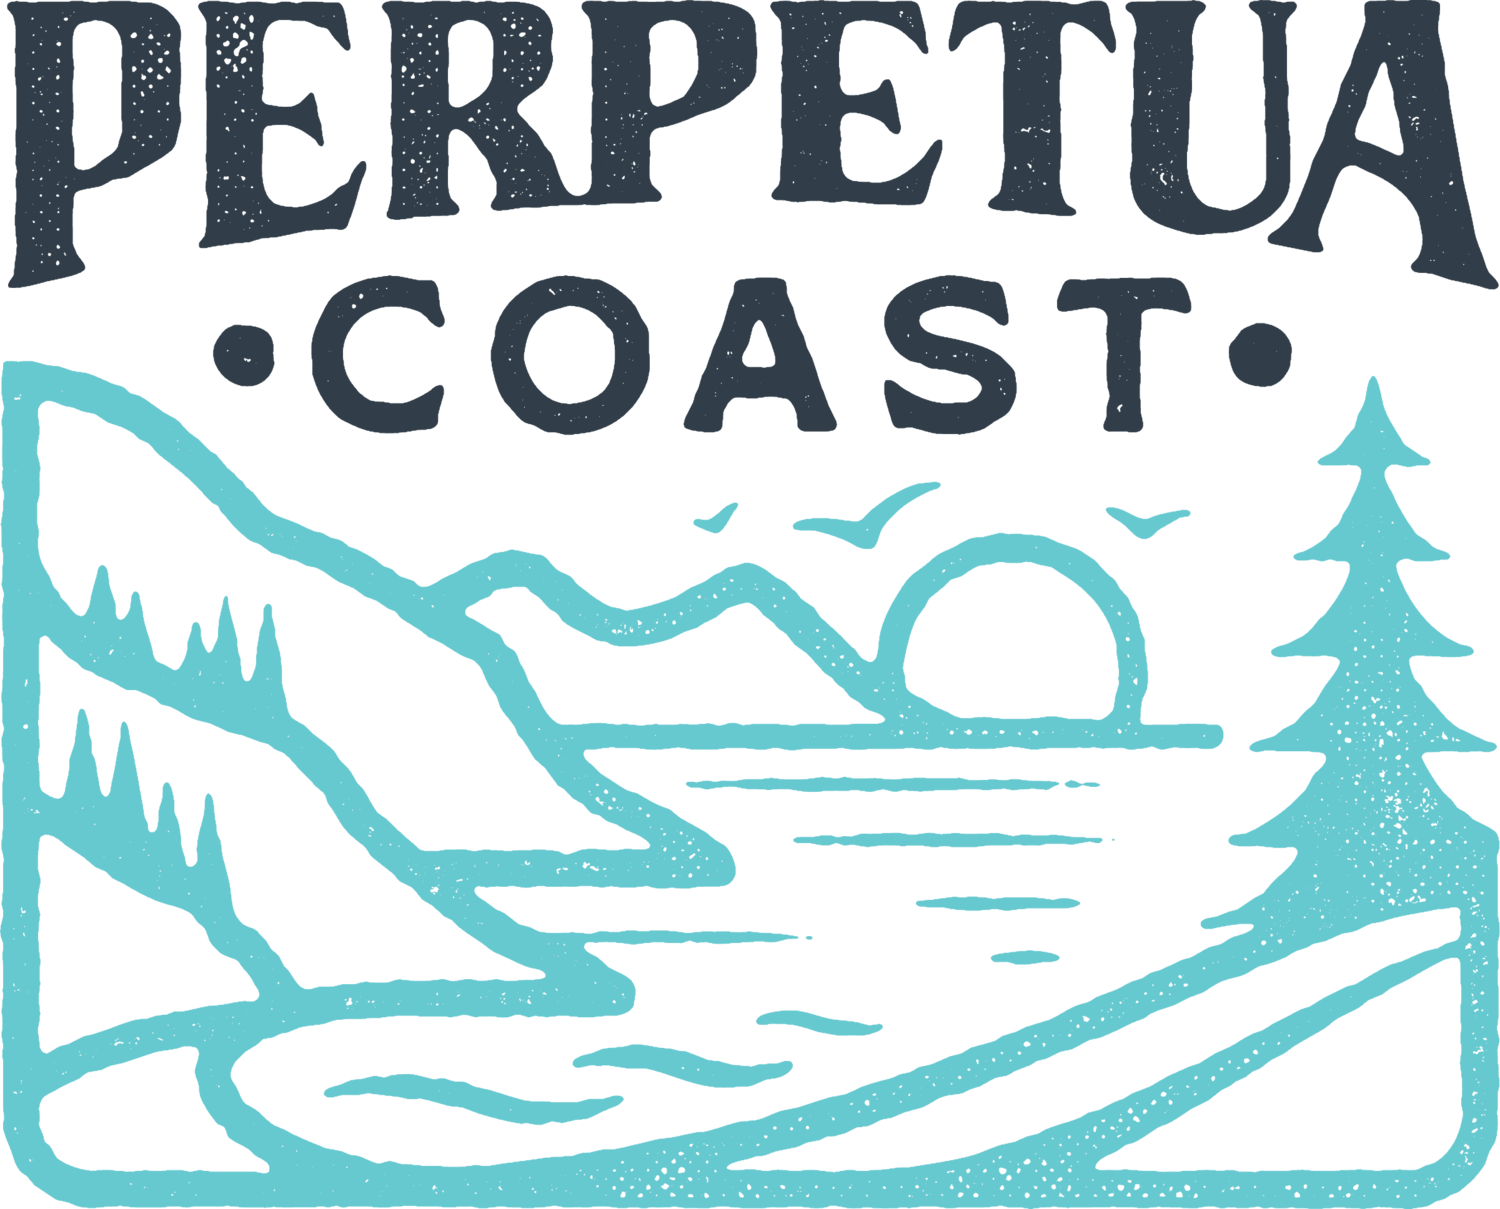 Perpetua Coast Trail Runs logo on RaceRaves